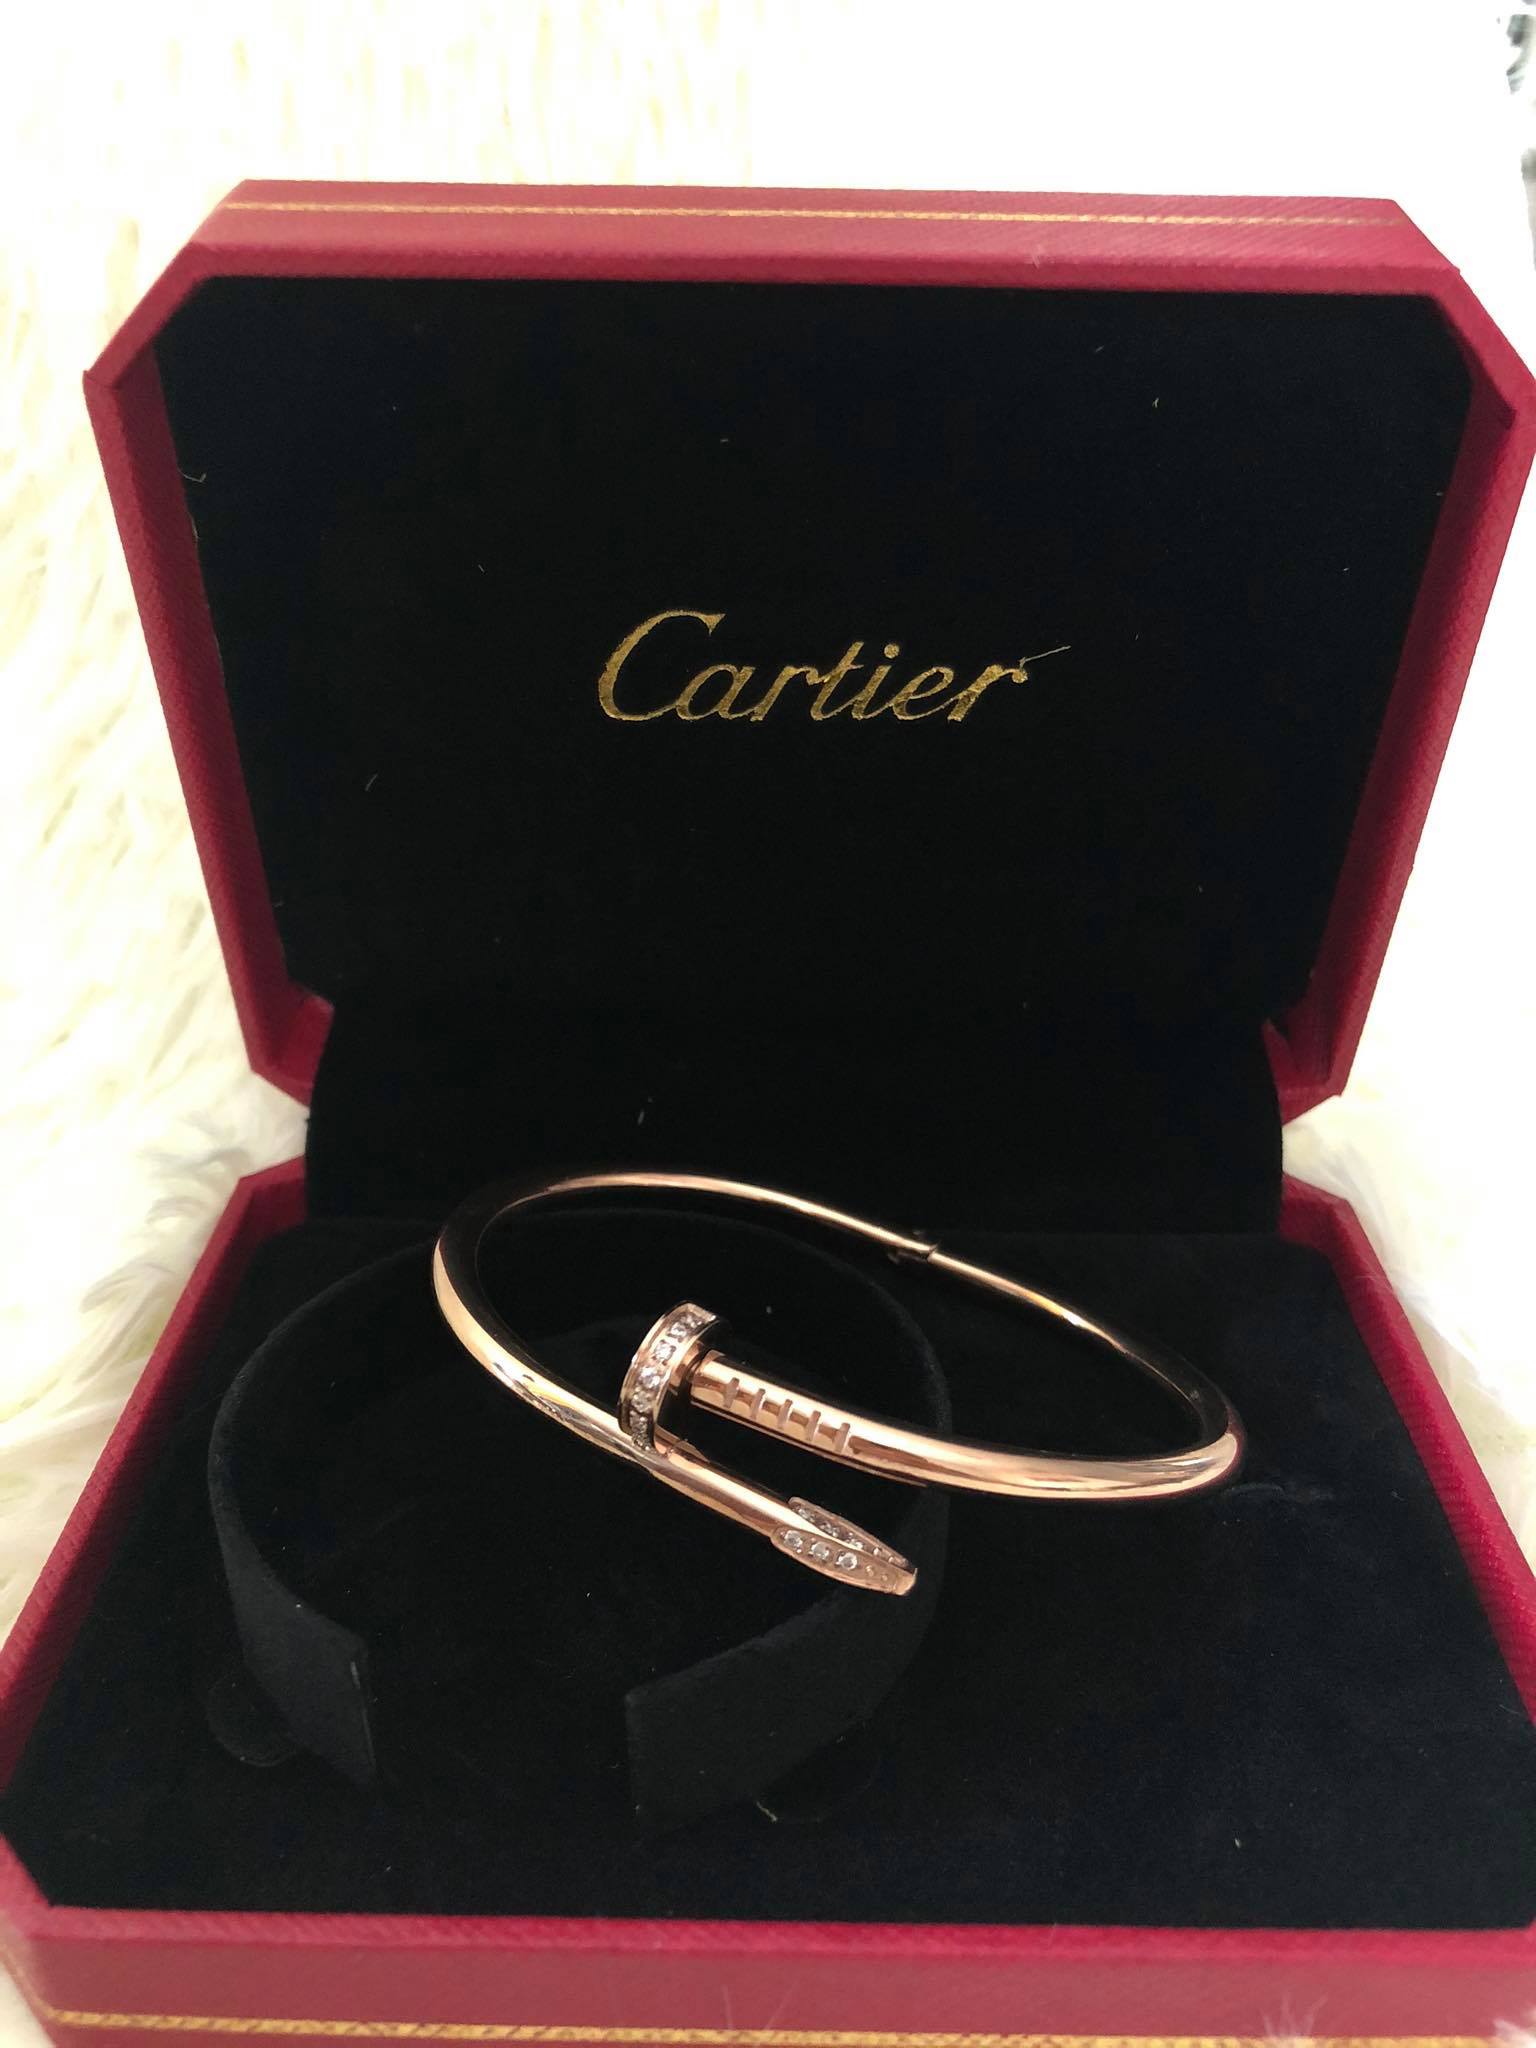 cartier bracelet price nail